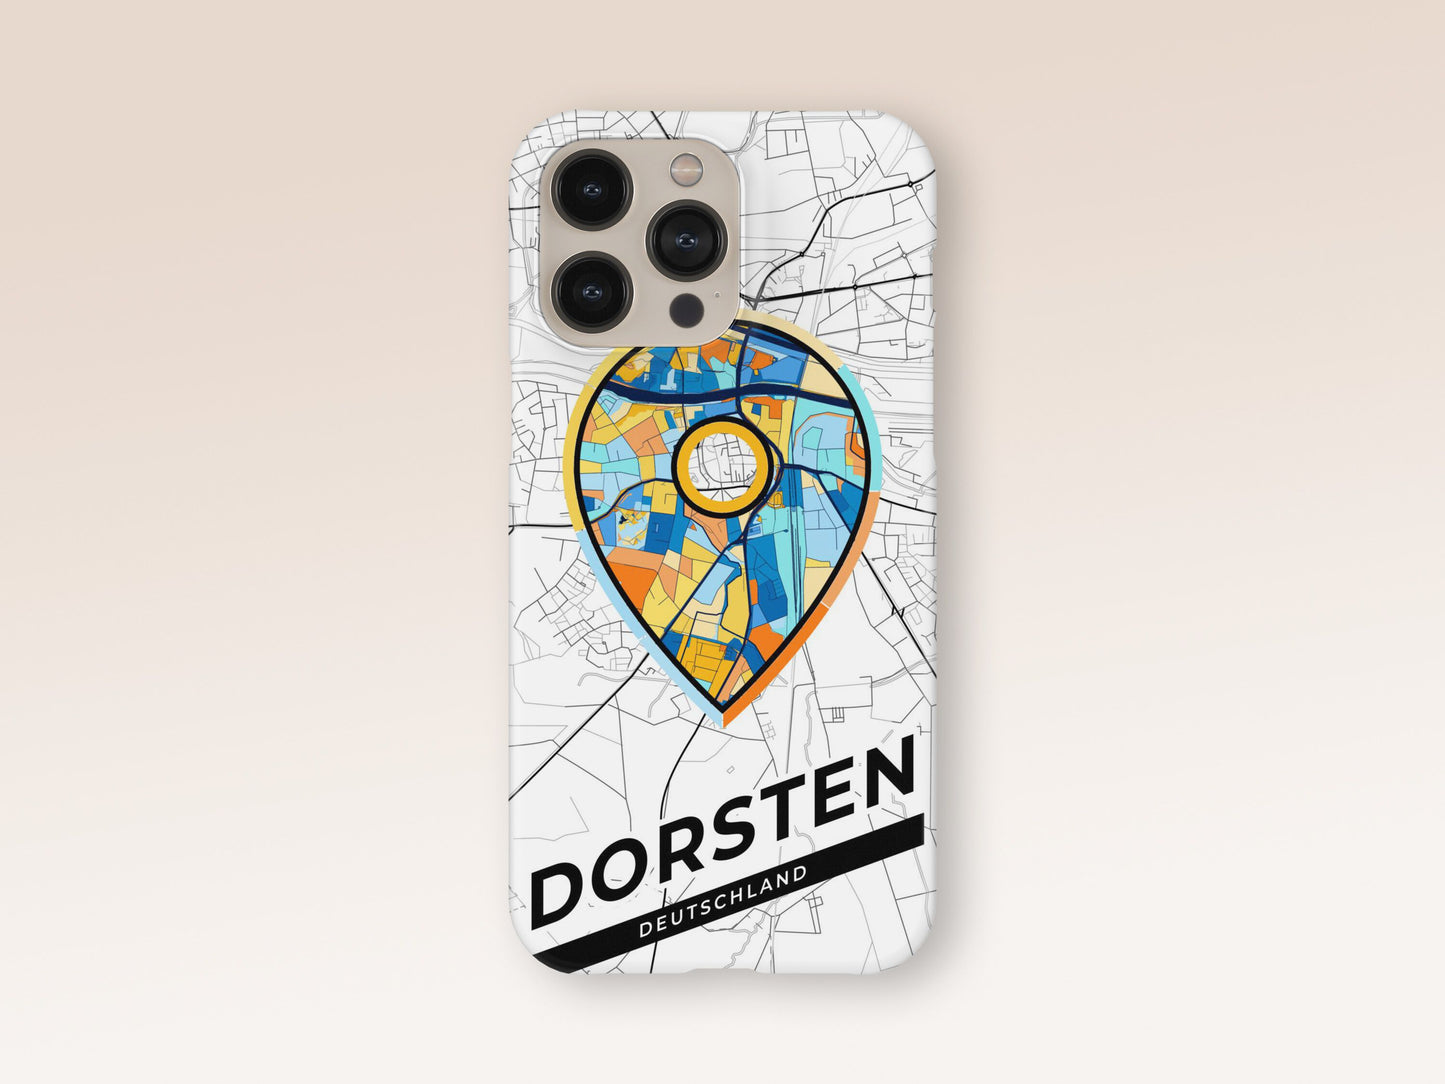 Dorsten Deutschland slim phone case with colorful icon. Birthday, wedding or housewarming gift. Couple match cases. 1